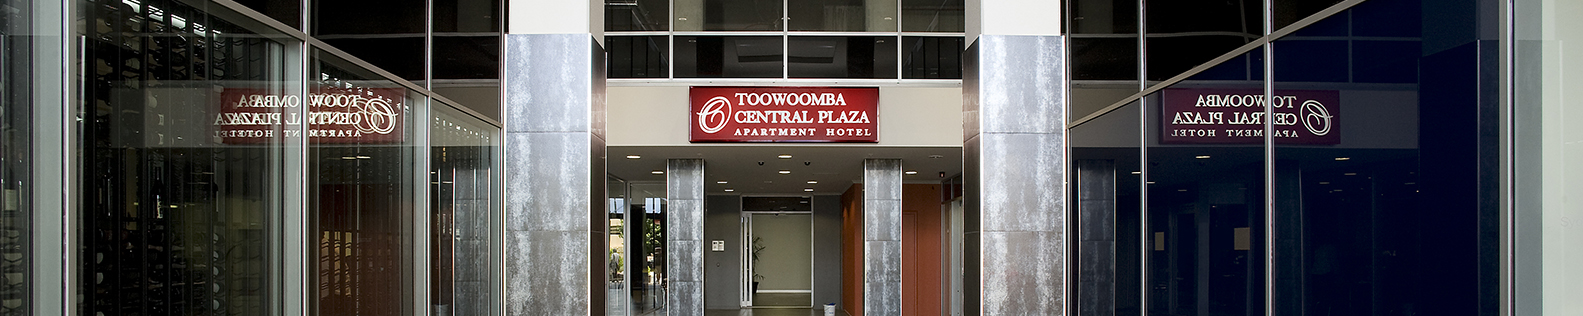 Toowoomba-Banner